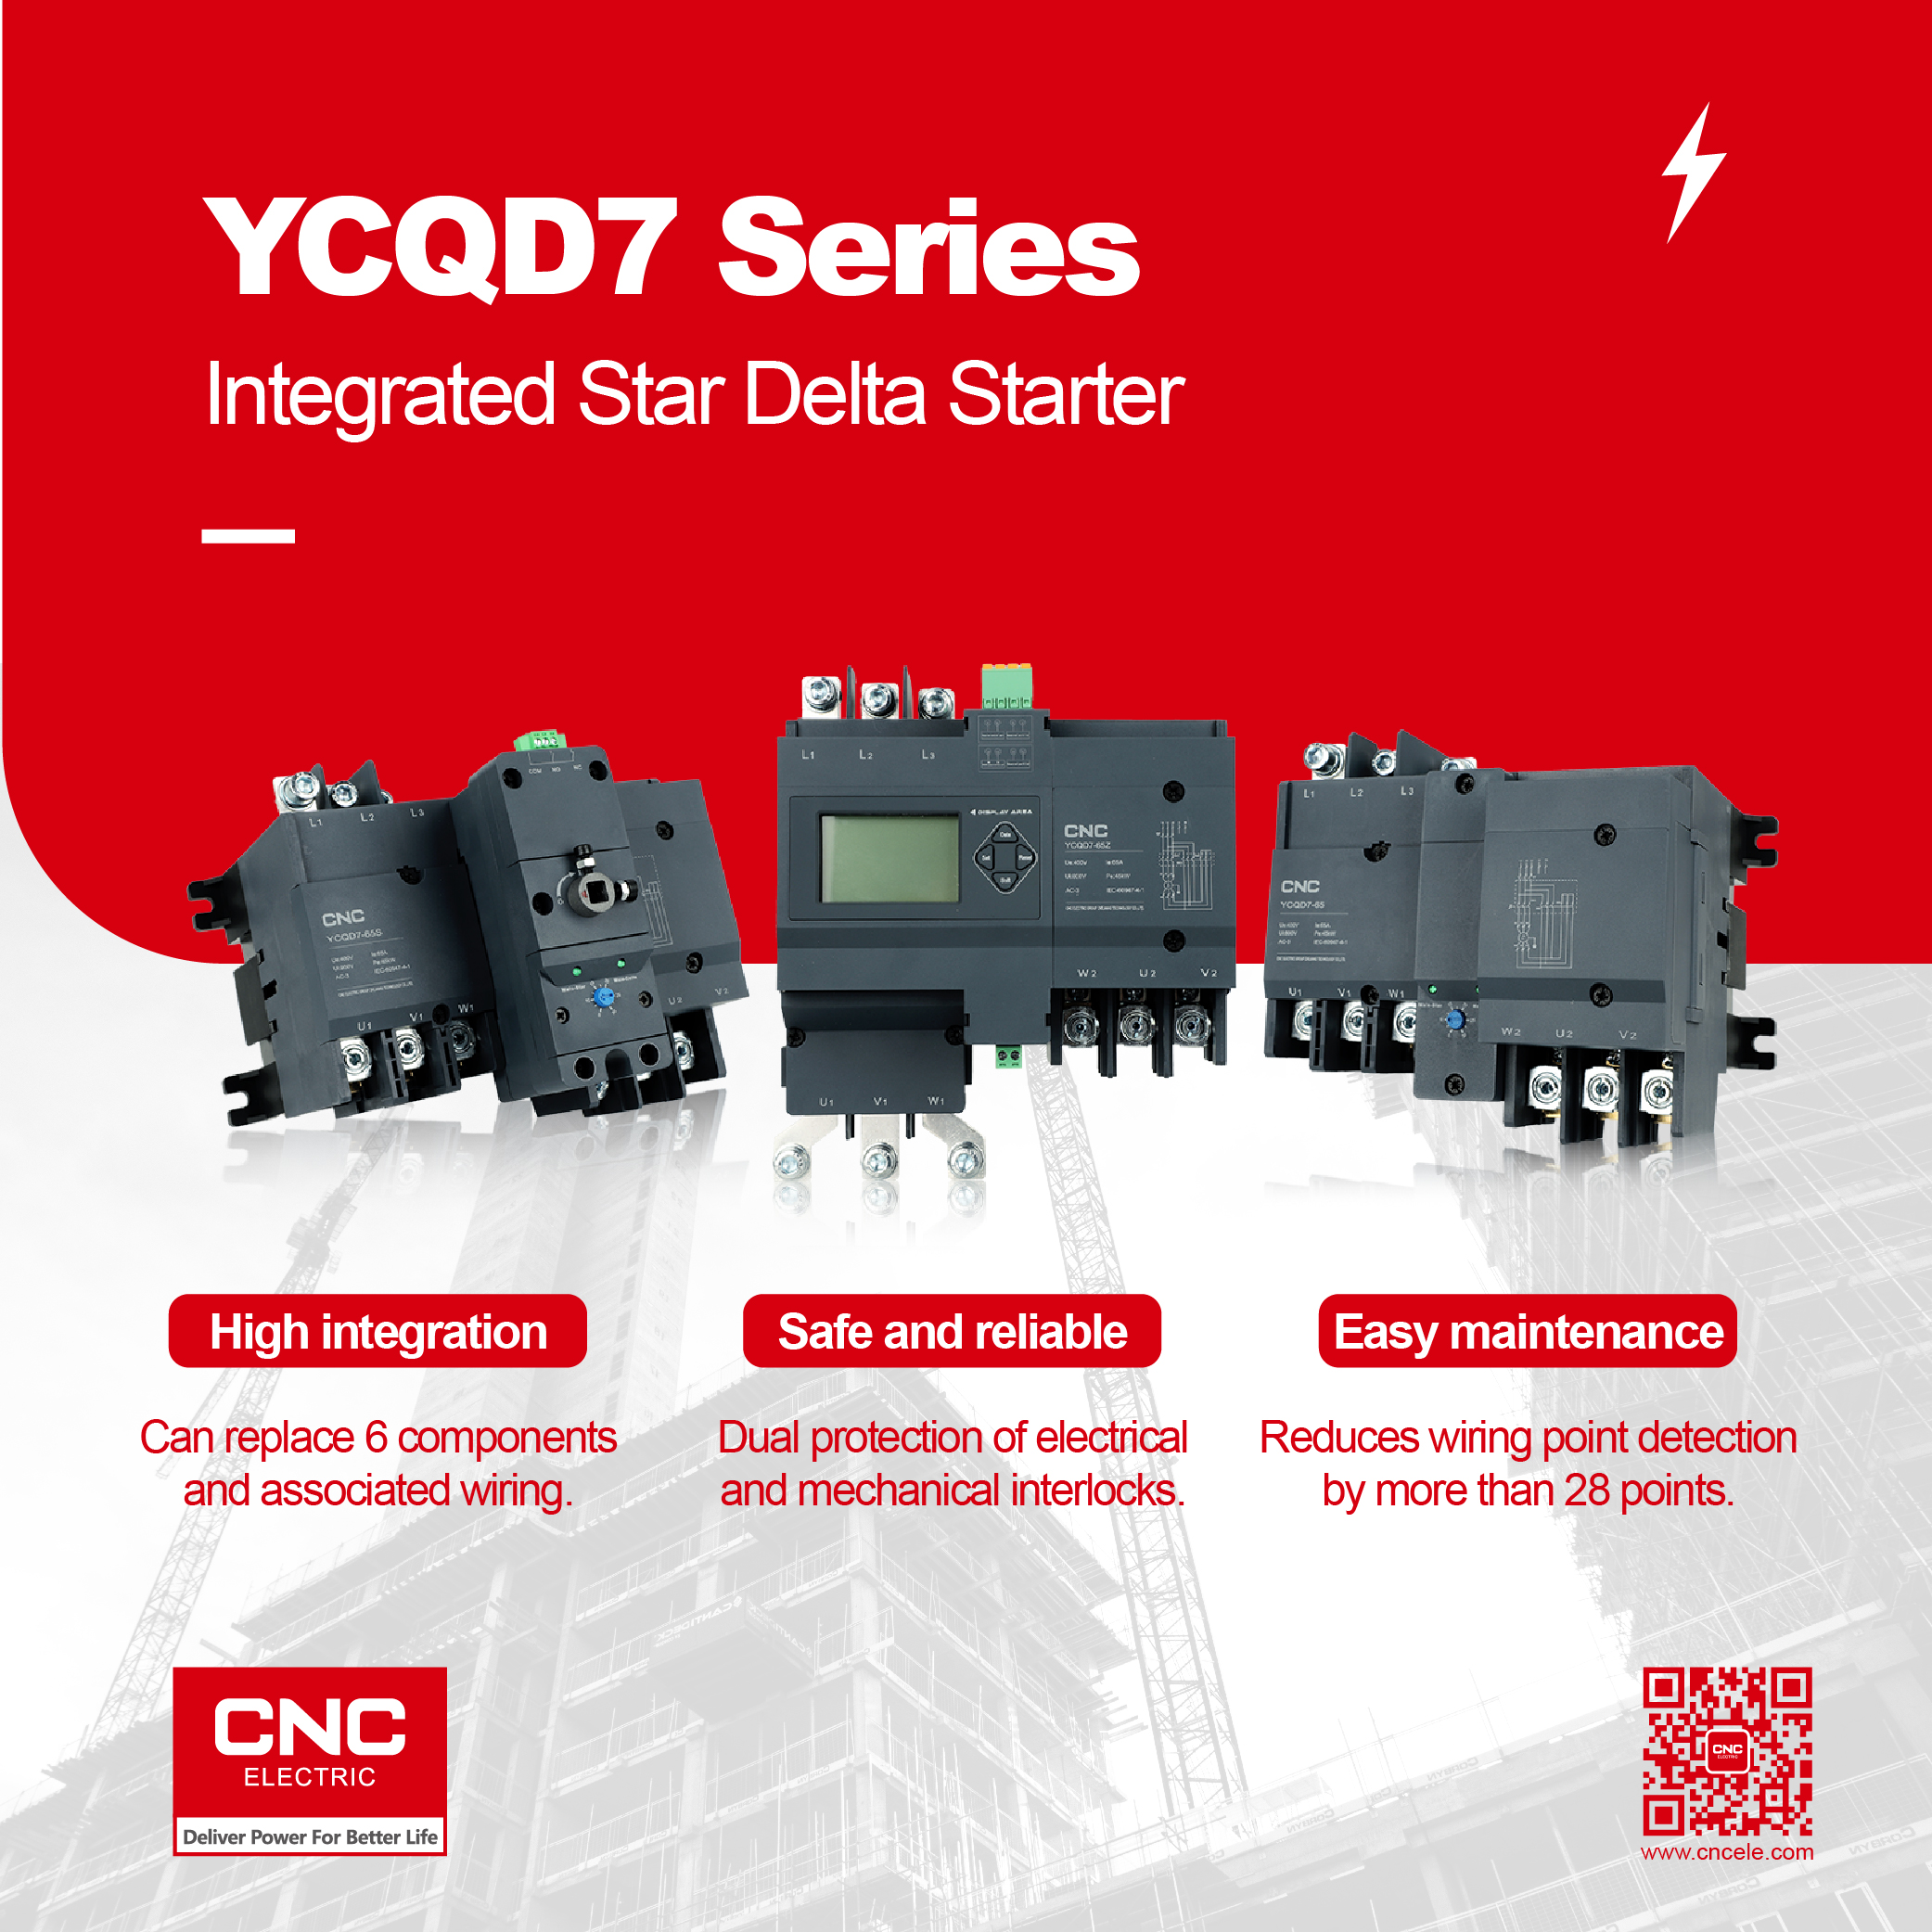 CNC |Starter Star Delta Terintegrasi Seri YCQD7